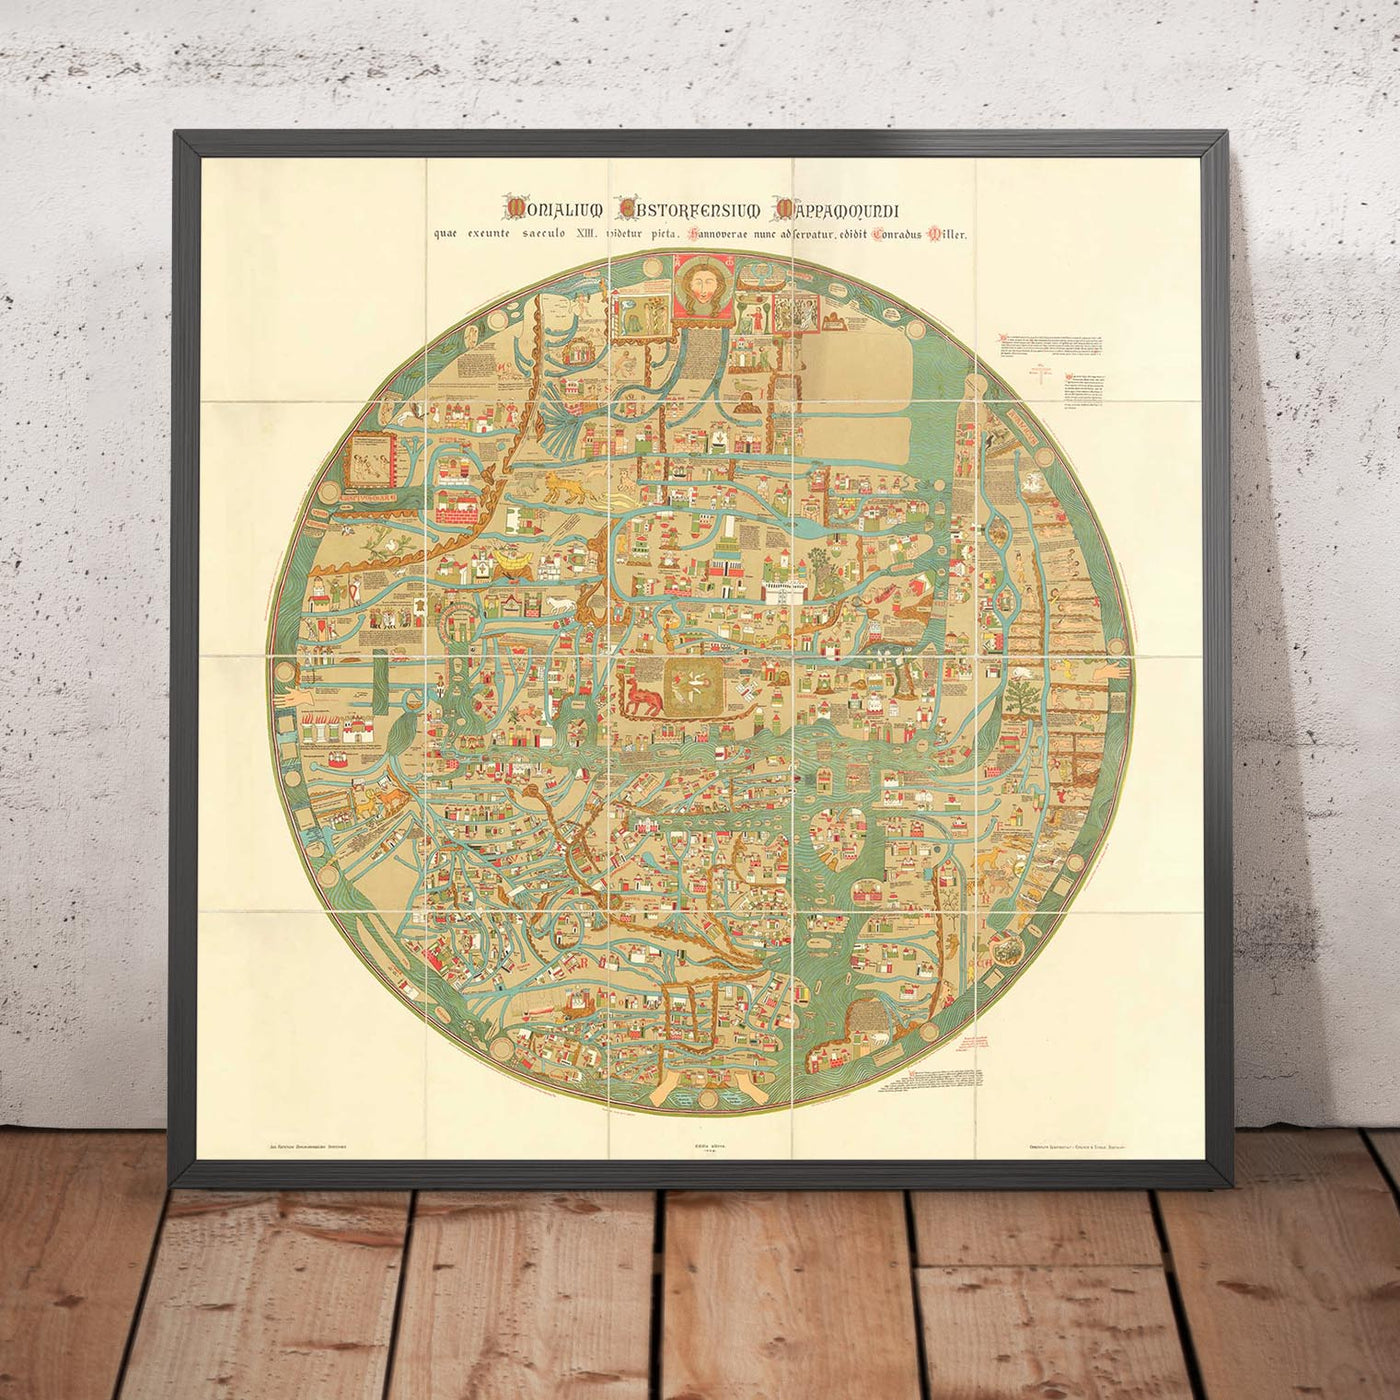 Old Ebstorf Mappa Mundi - Atlas mondial ancien du XIIIe siècle - Gibraltar, Méditerranée, Jérusalem, Sicile, Grèce